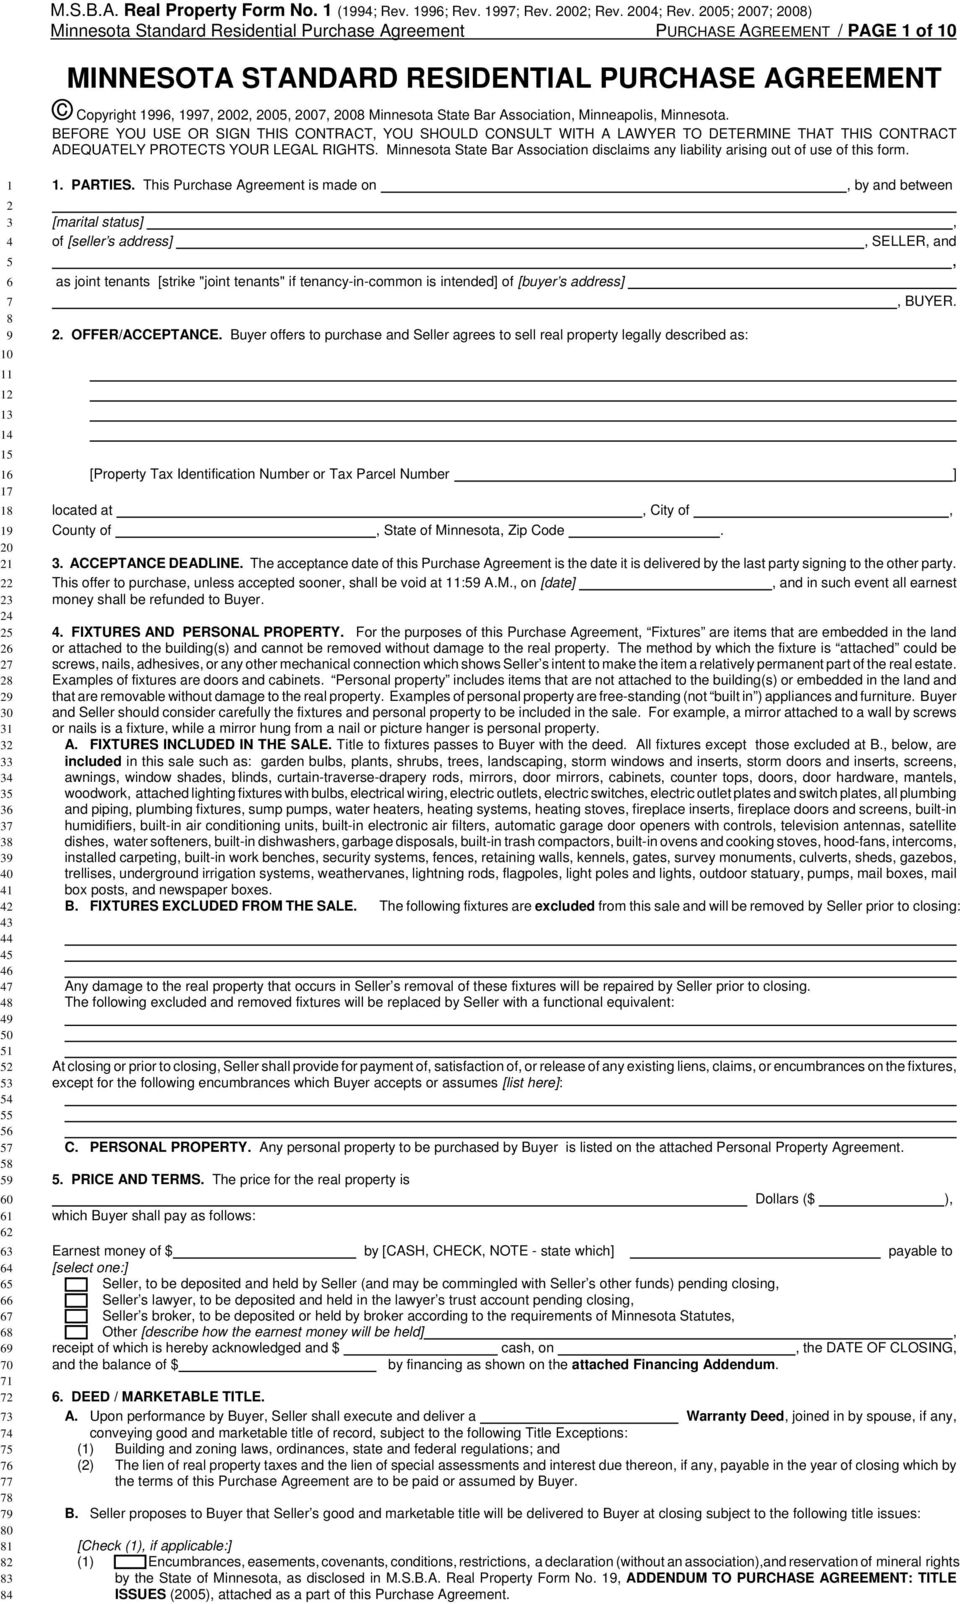 Minnesota Purchase Agreement Minnesota Standard Residential Purchase Agreement Pdf